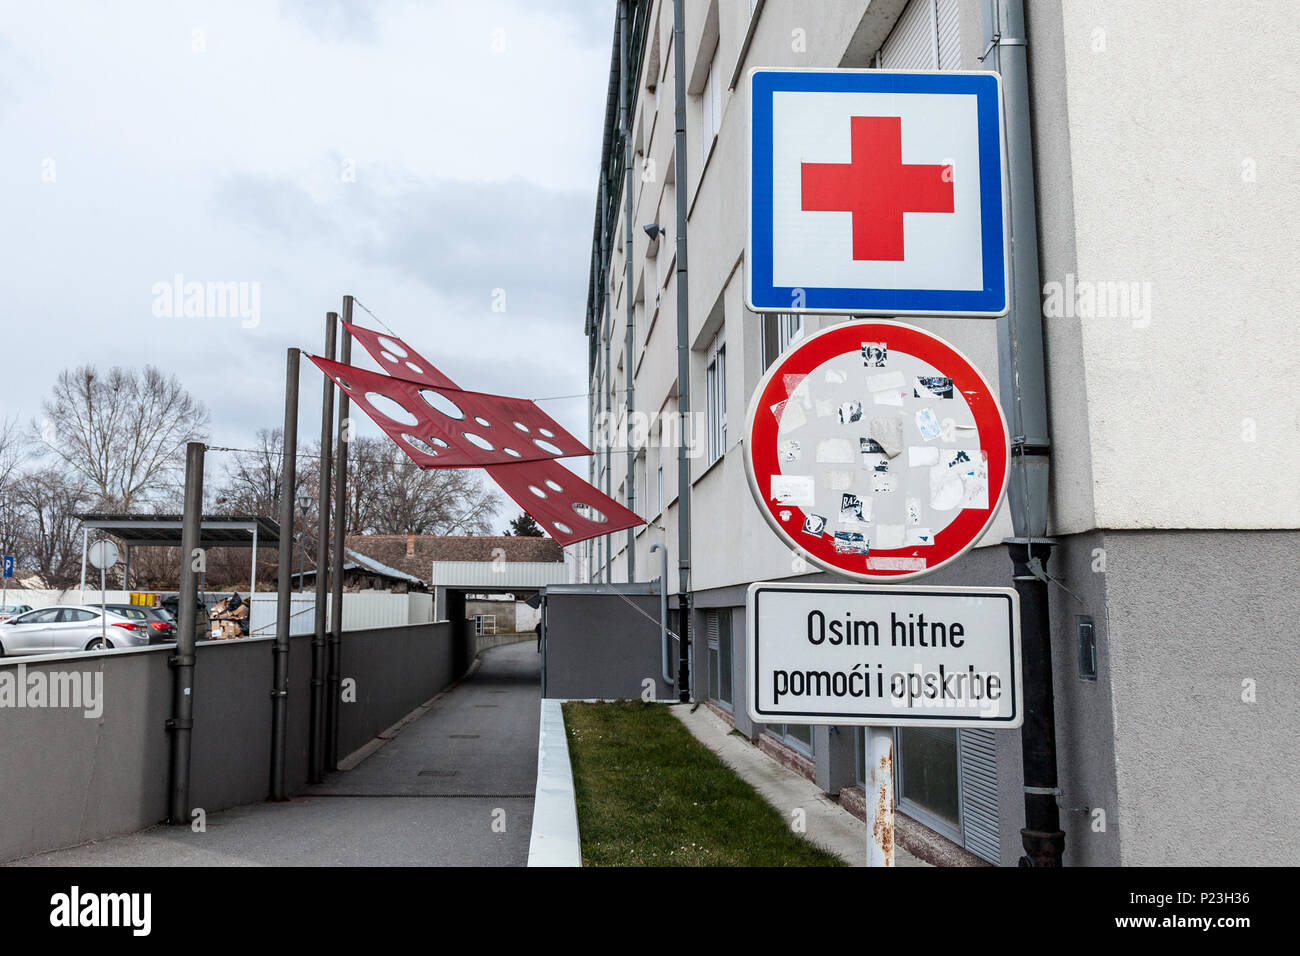 VUKOVAR, CROATIA - FEBRUARY 25, 2018: Entrance of the Vukovar Hospital memorial with its iconic red cross, a memorial dedicated to the massacre that o Stock Photo